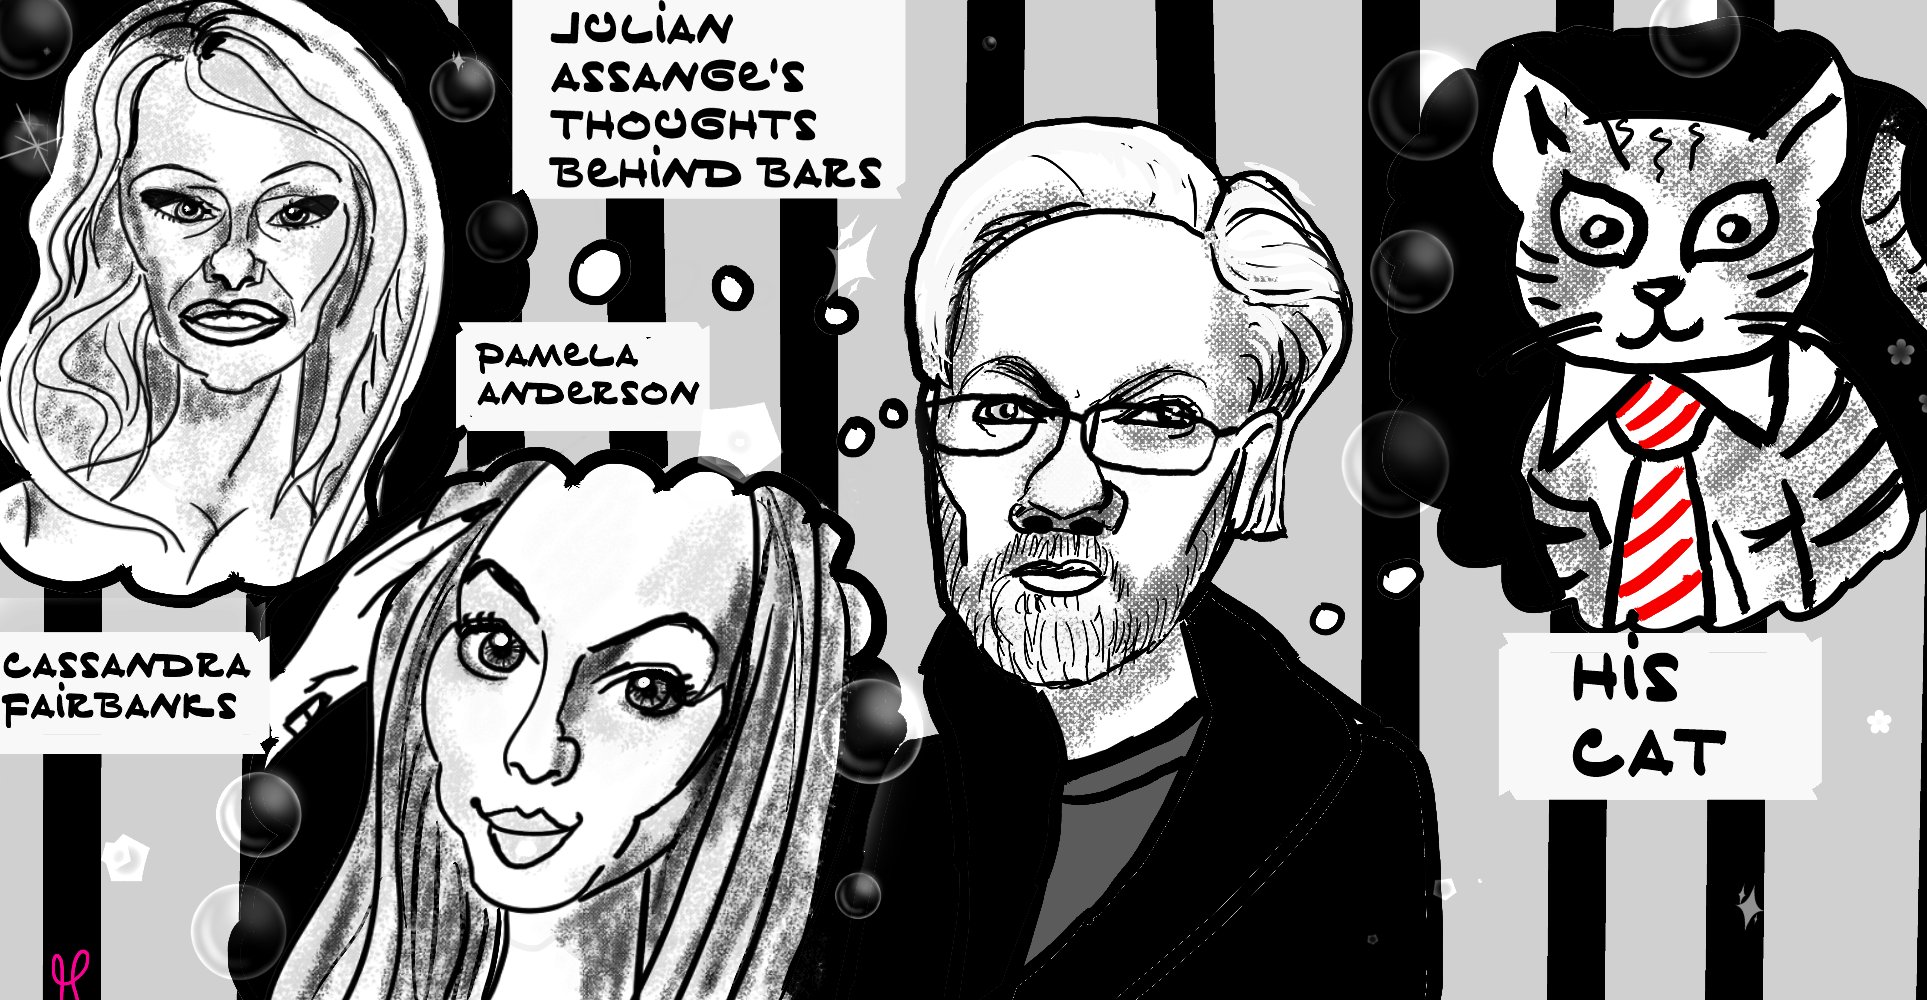 Julian Assange Cassandra Fairbanks Pamela Anderson political cartoon Wikileaks gateway pundit post thumbnail image